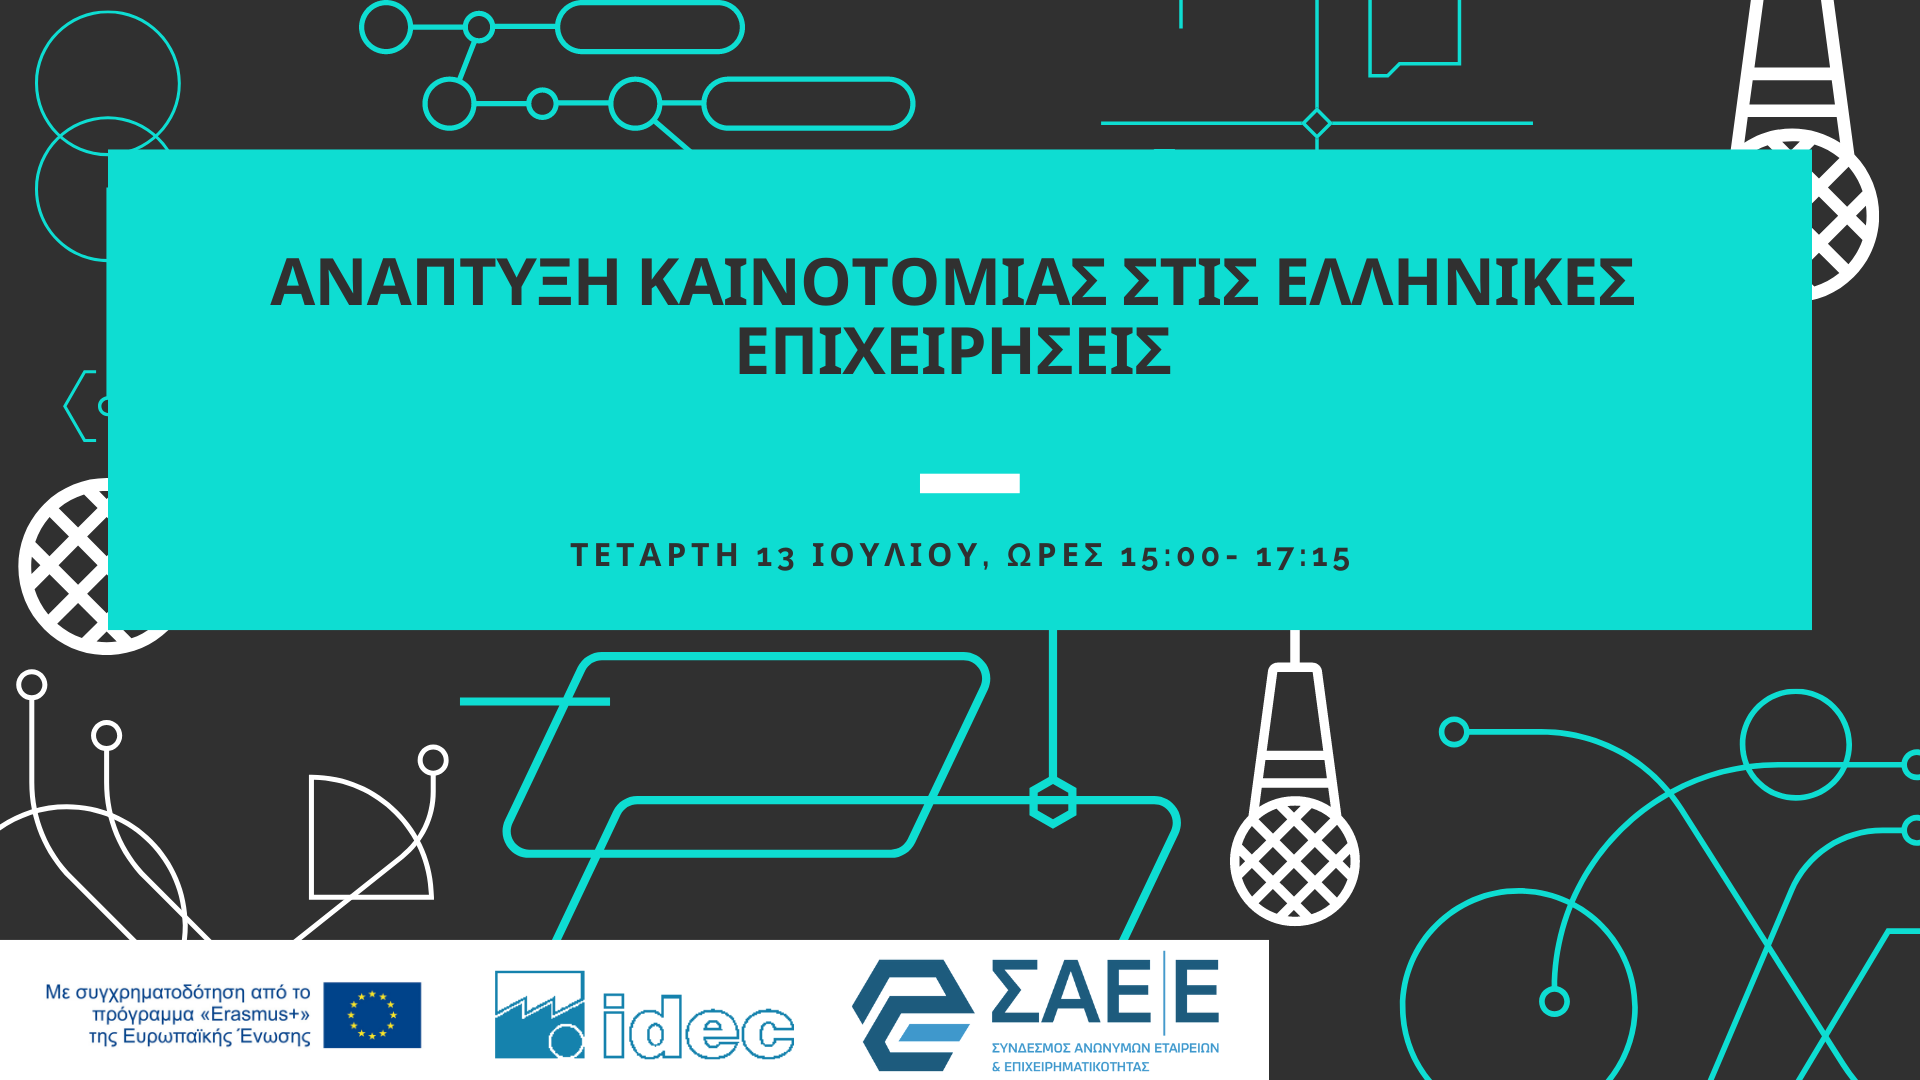 Webinar για την Ανάπτυξη Καινοτομίας στις Ελληνικές Επιχειρήσεις